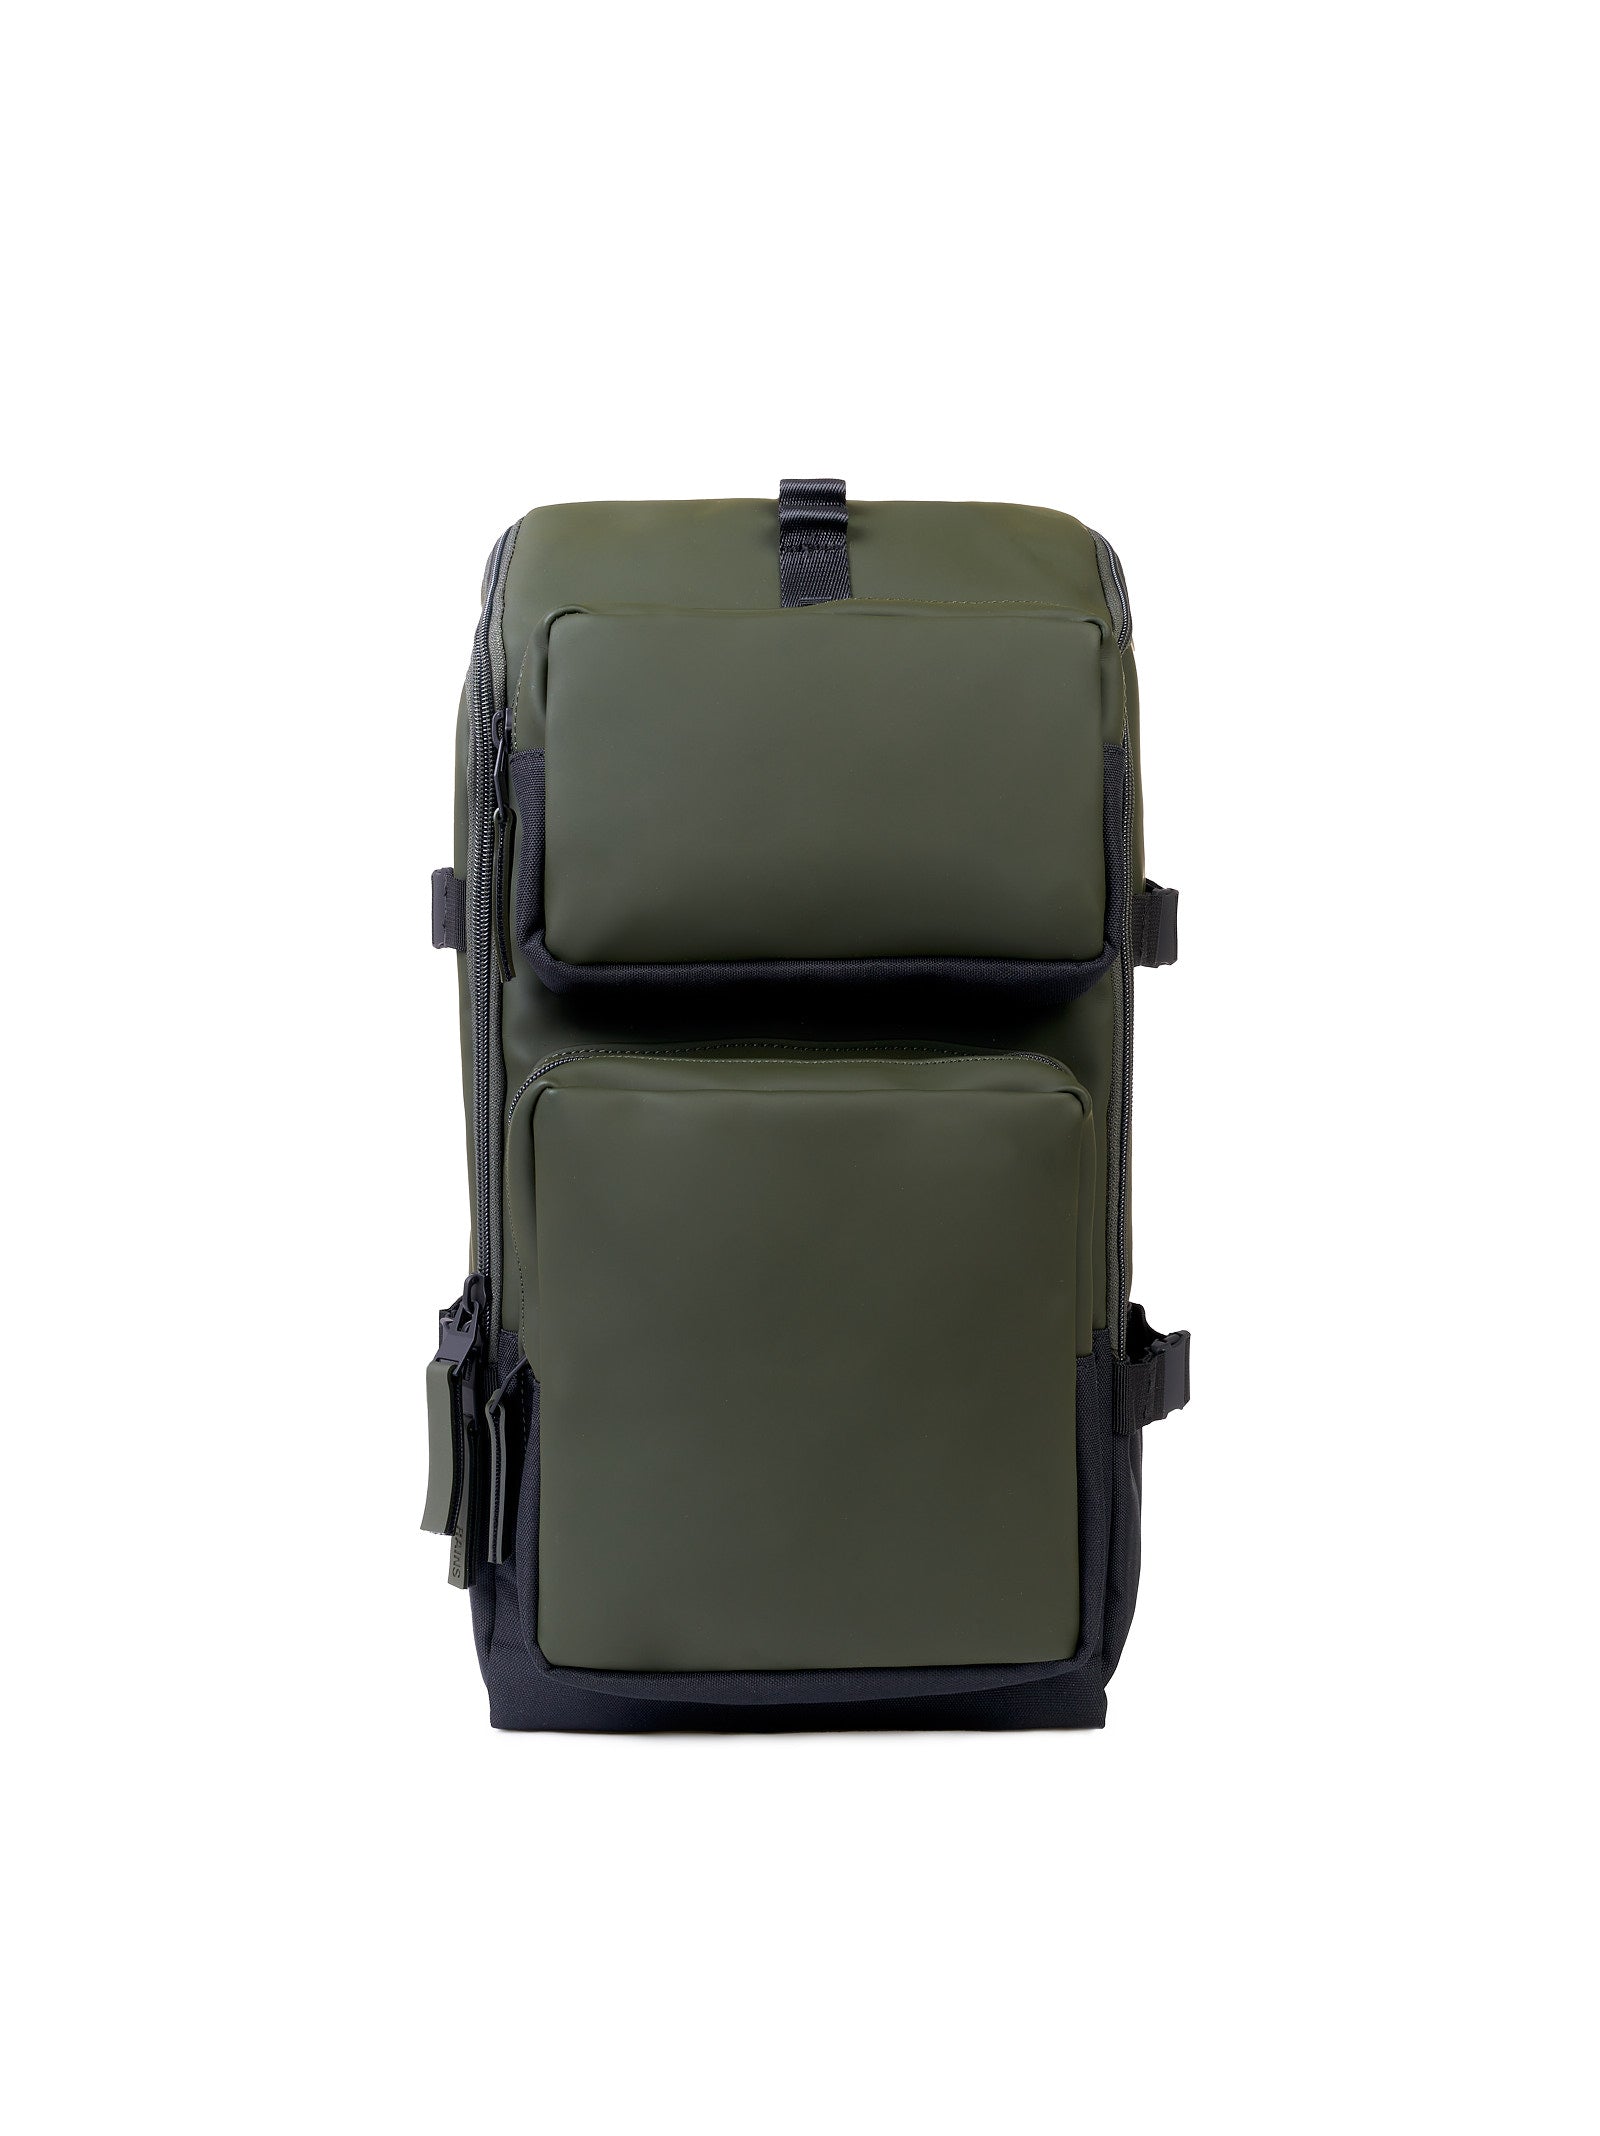 Zaino RAINS Trail cargo backpack
Verde militare